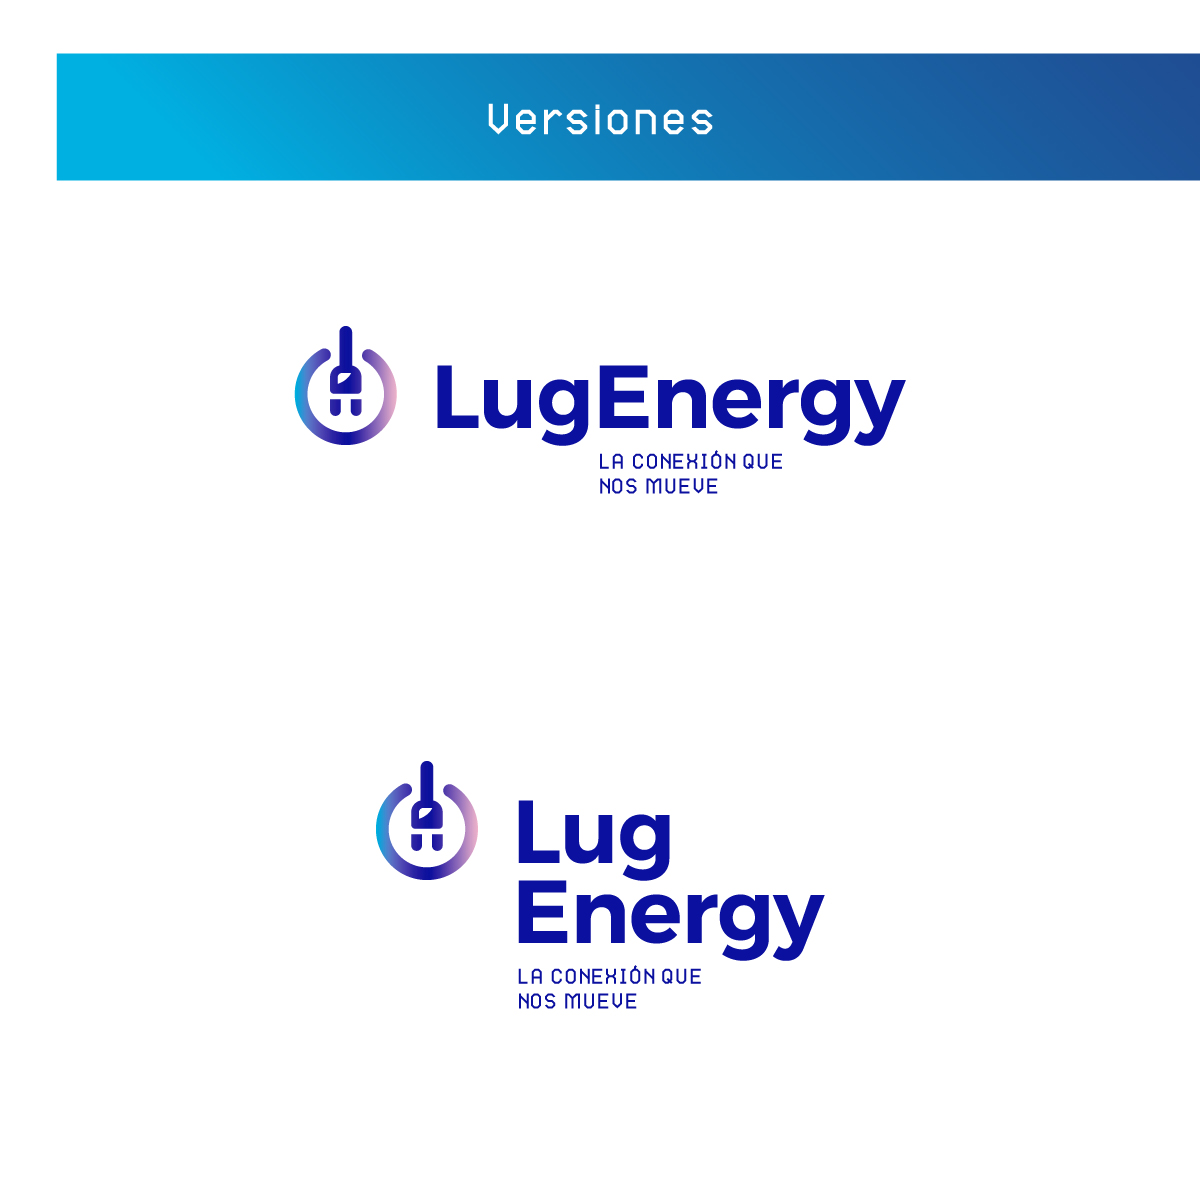 lugenergy-diseño-rebranding-versiones